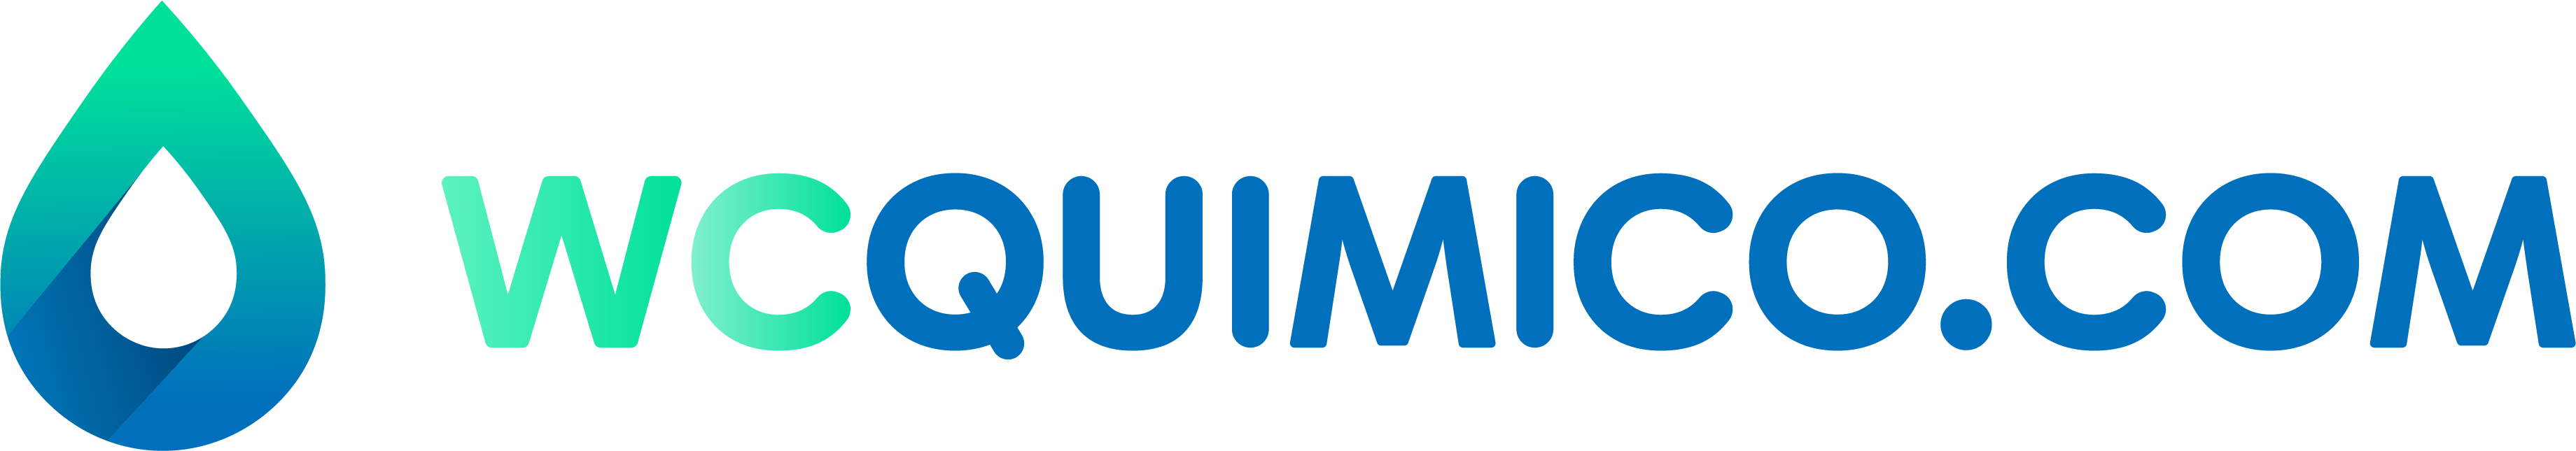 Logotipo wc quimico